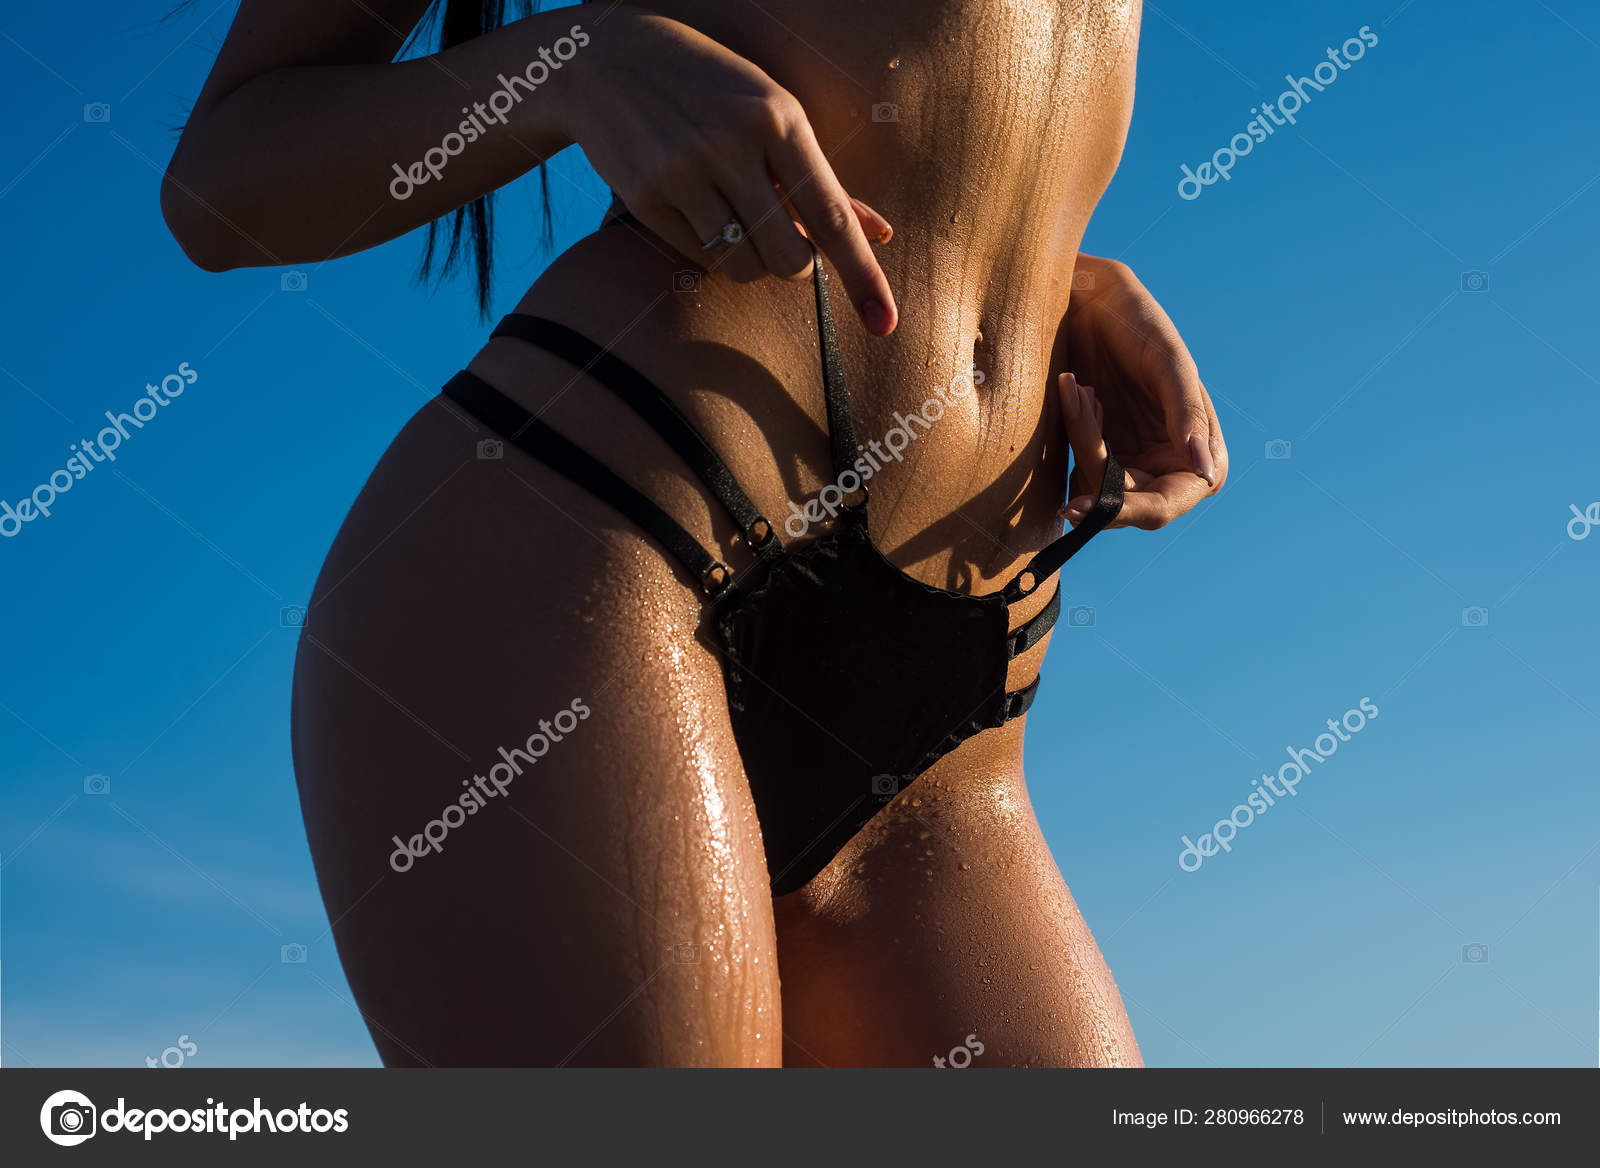 Big sexy sandy buttocks. Luxury ass. Beautiful female butt. Woman lingerie. Beautiful woman body. Sexy girl with big image